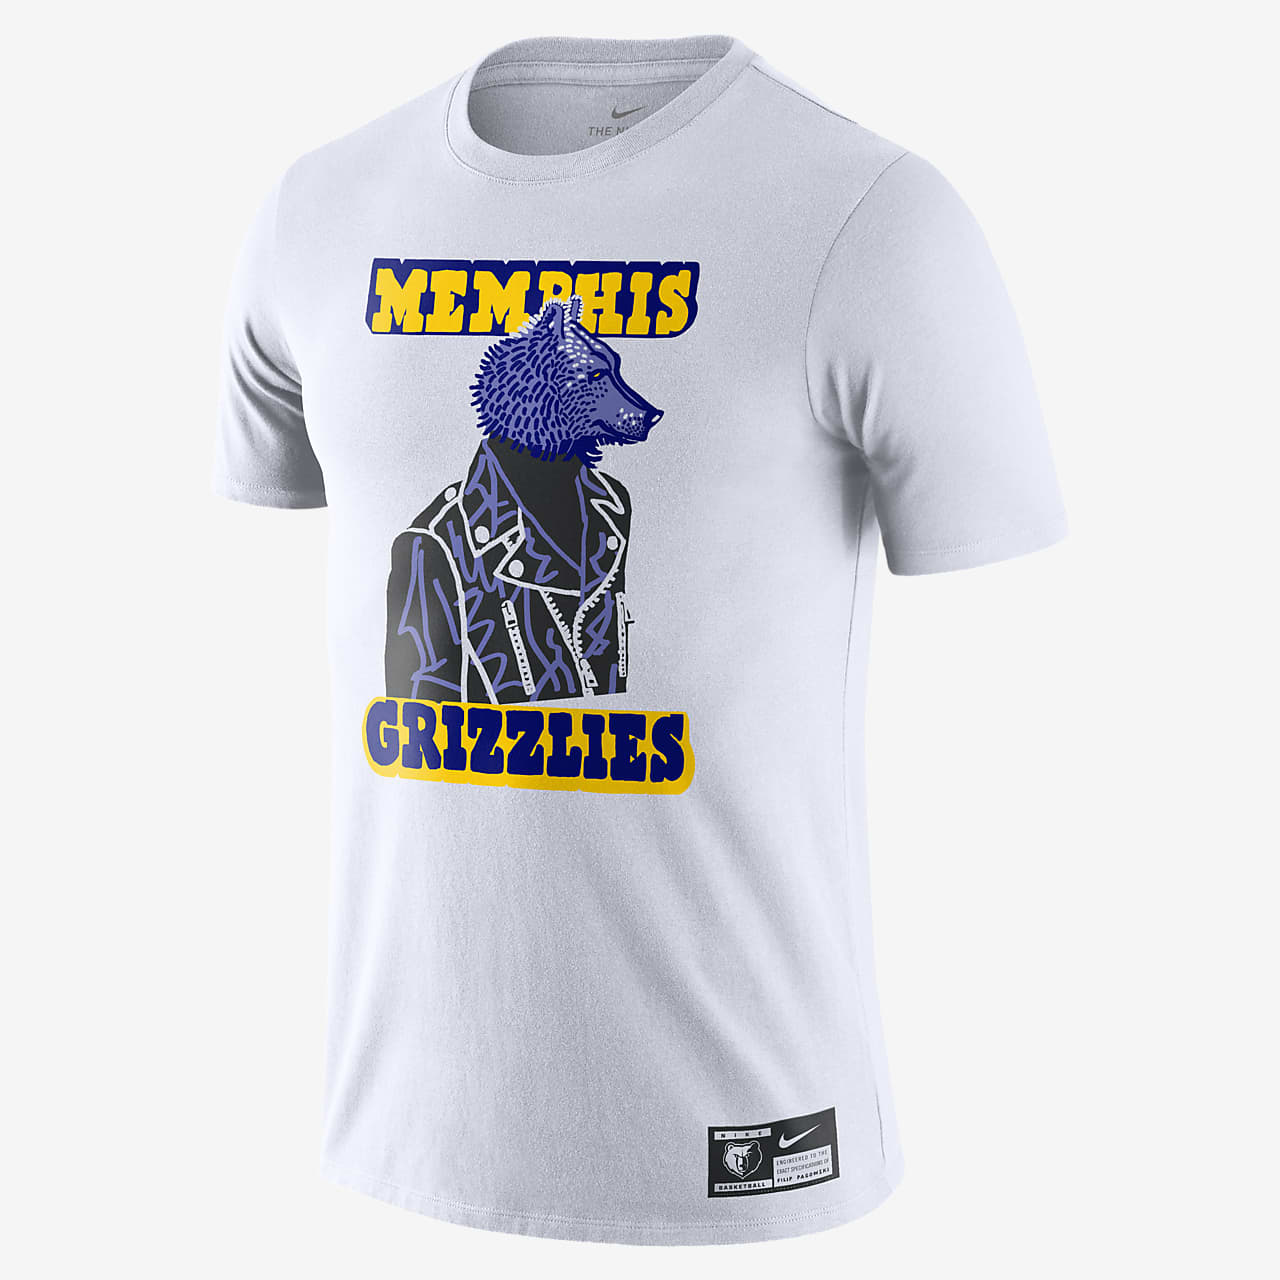 Memphis Grizzlies Nike x Filip Pagowski Men's NBA T-Shirt